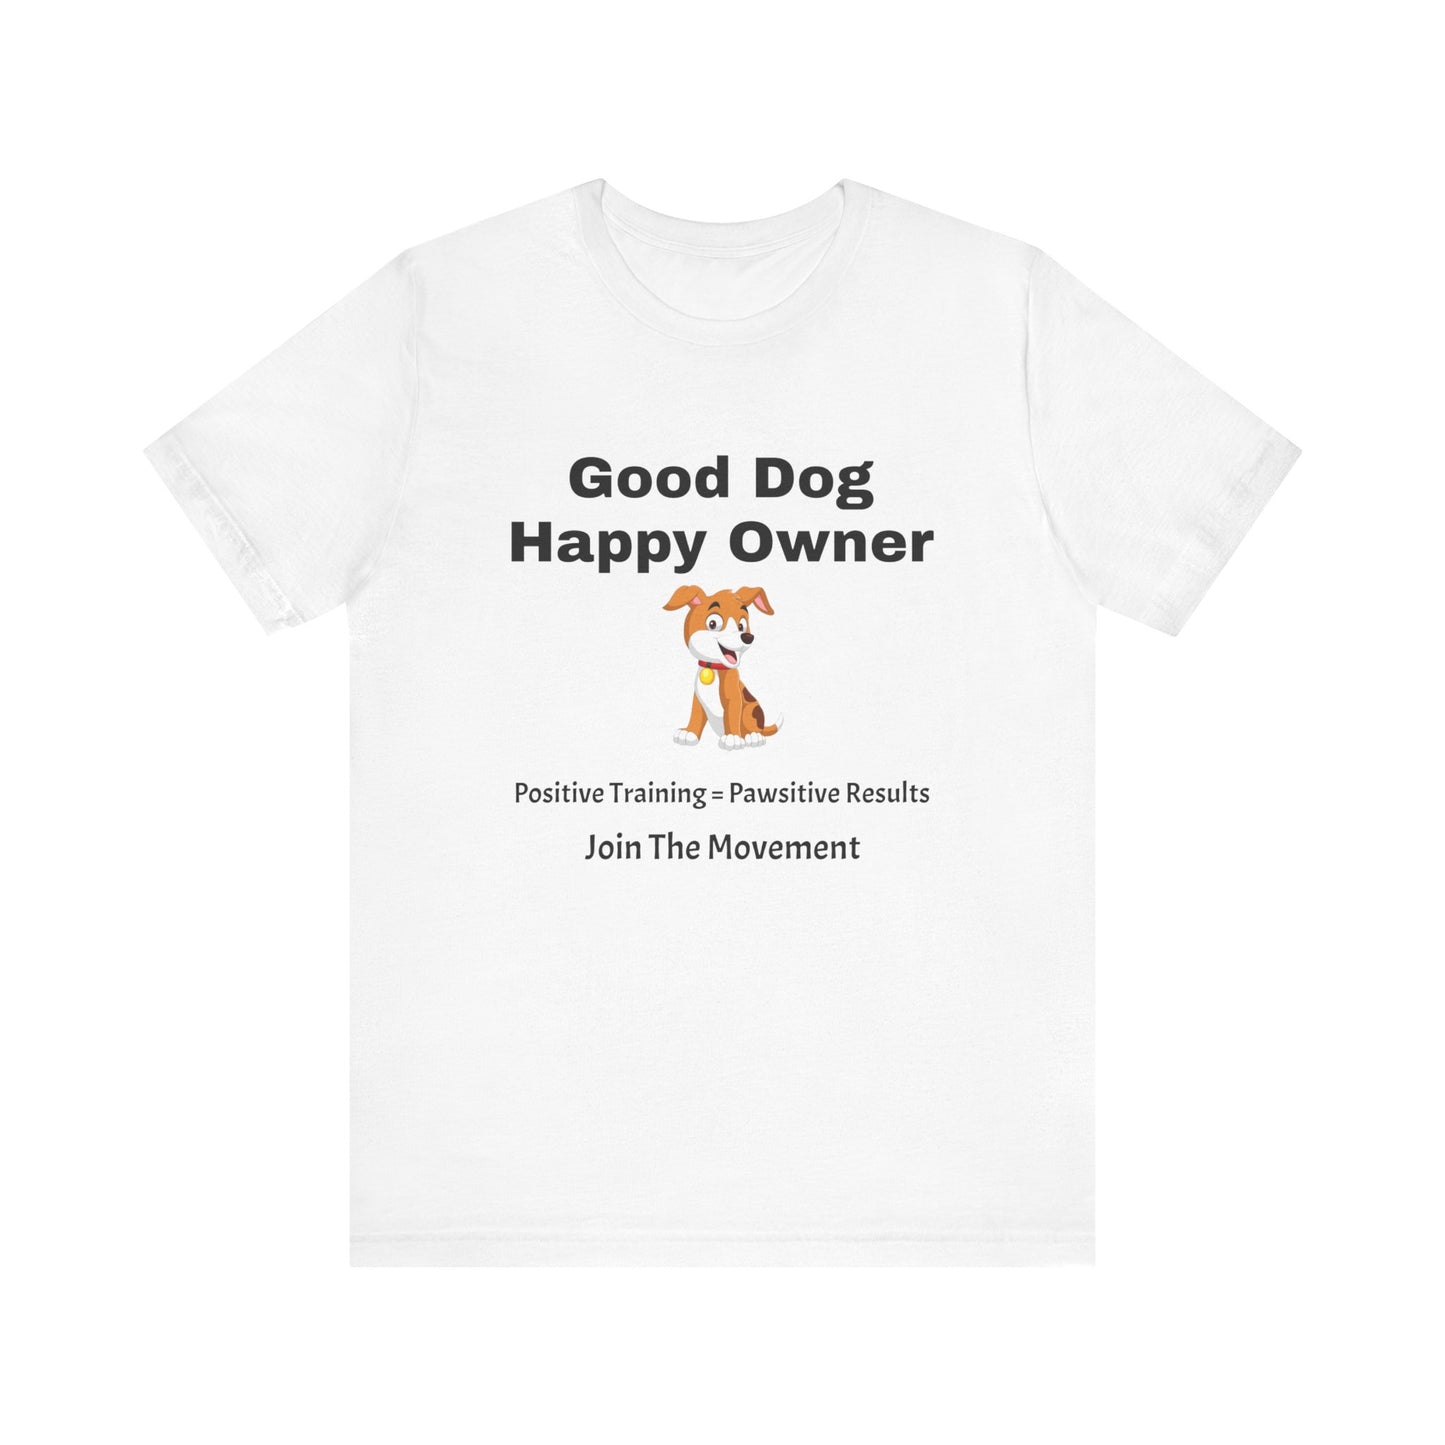 Unisex Jersey Short Sleeve Tee - Trained Dog Happy LIfe